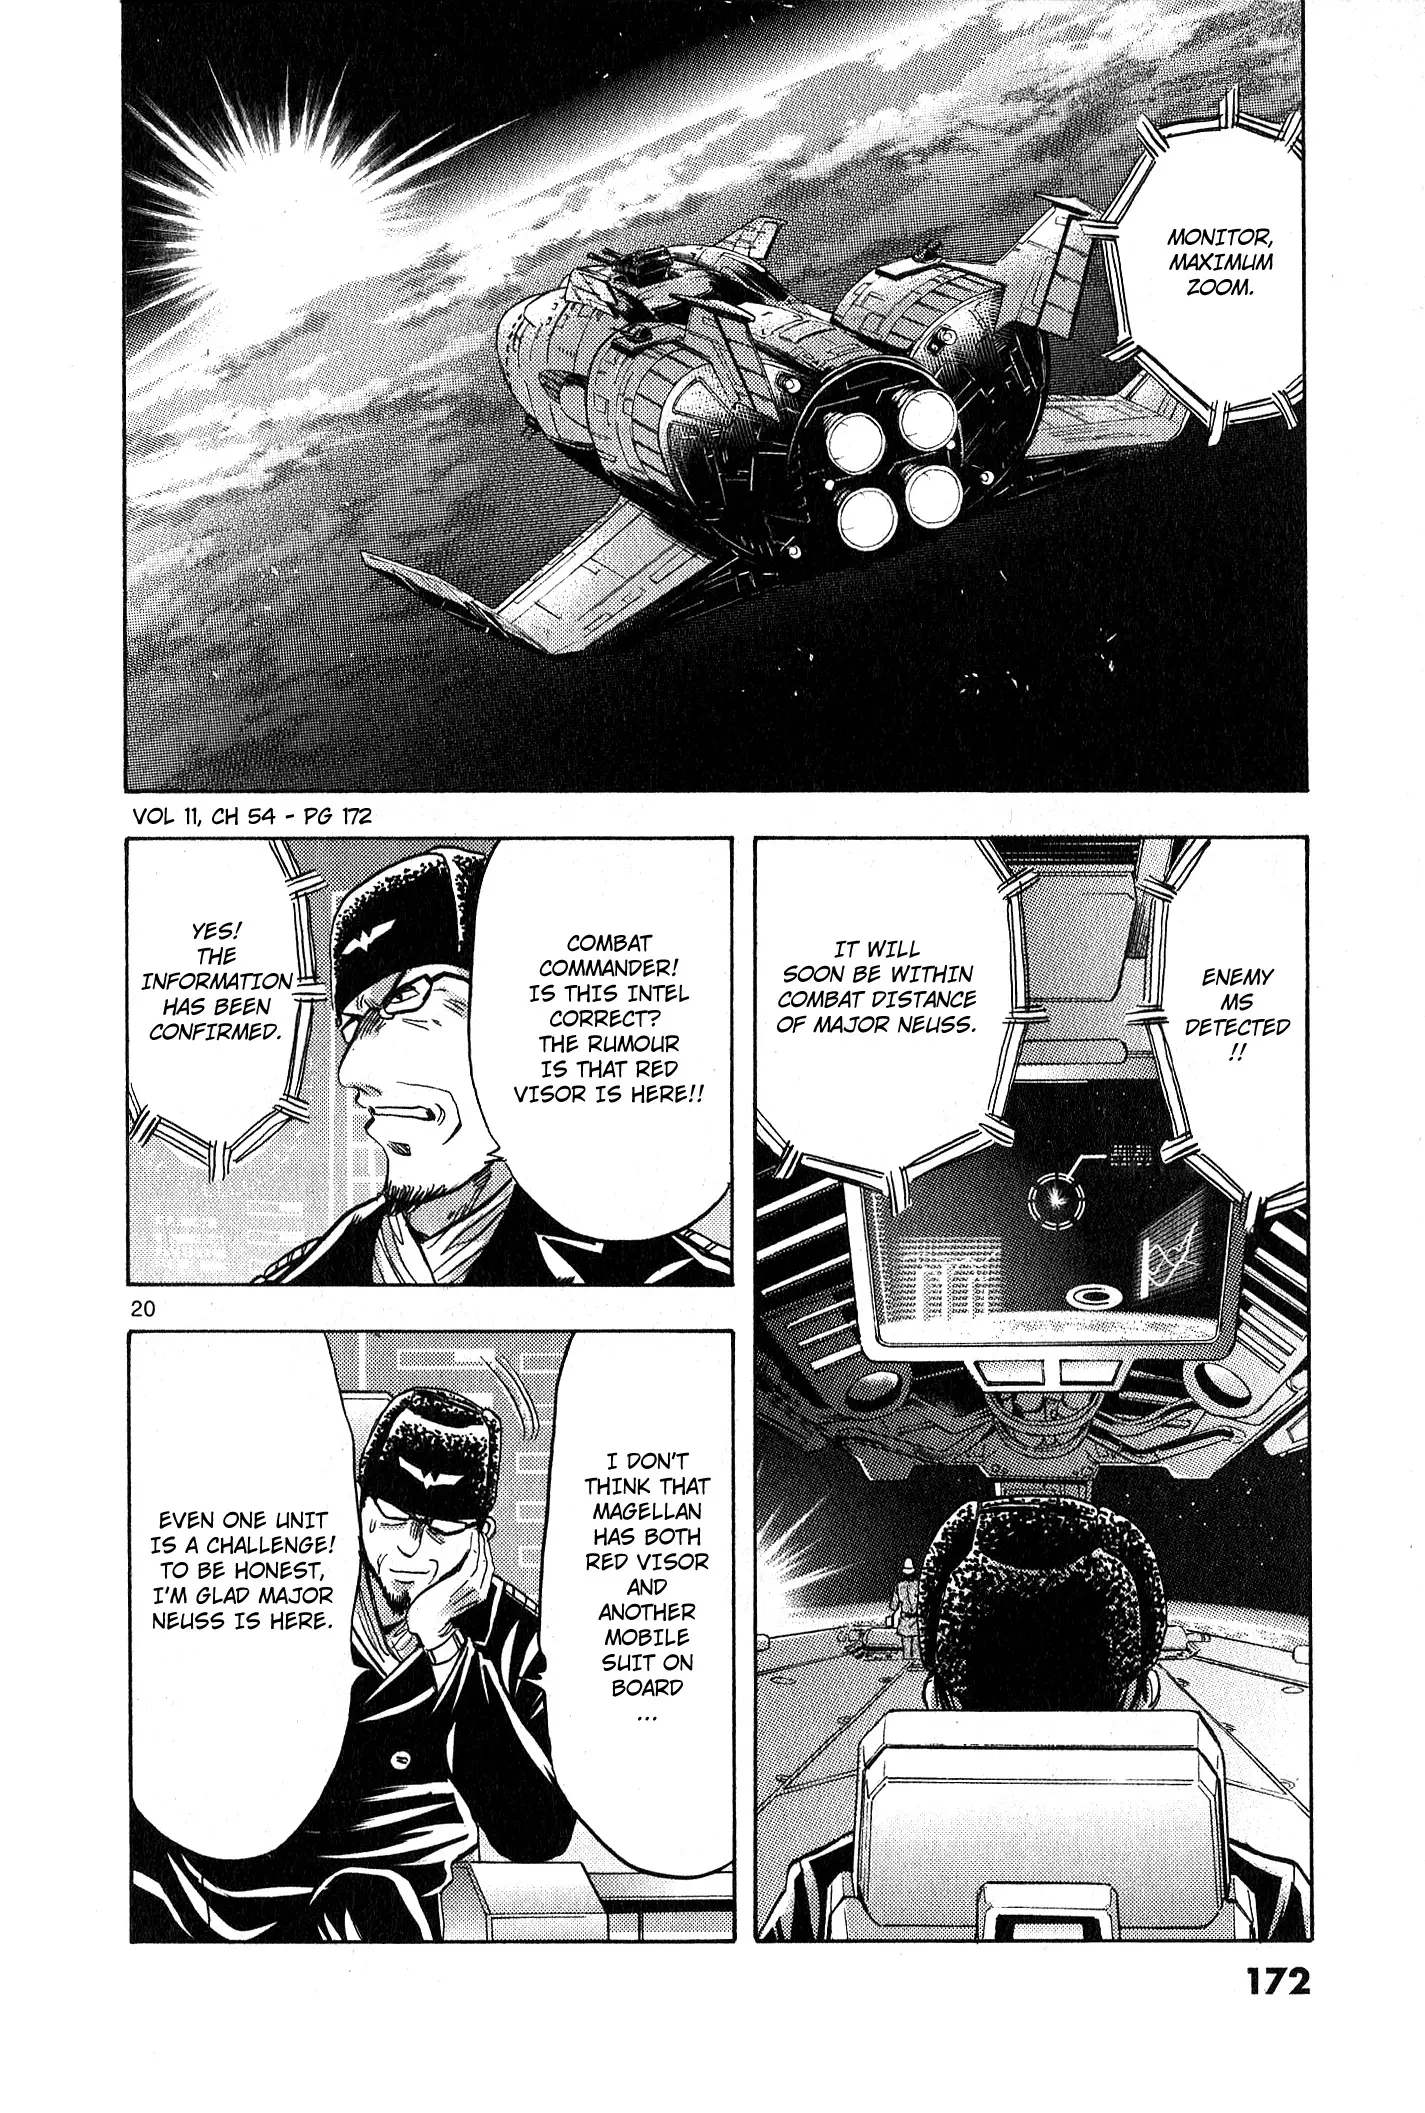 Mobile Suit Gundam Aggressor - 54 page 20-4ce47837